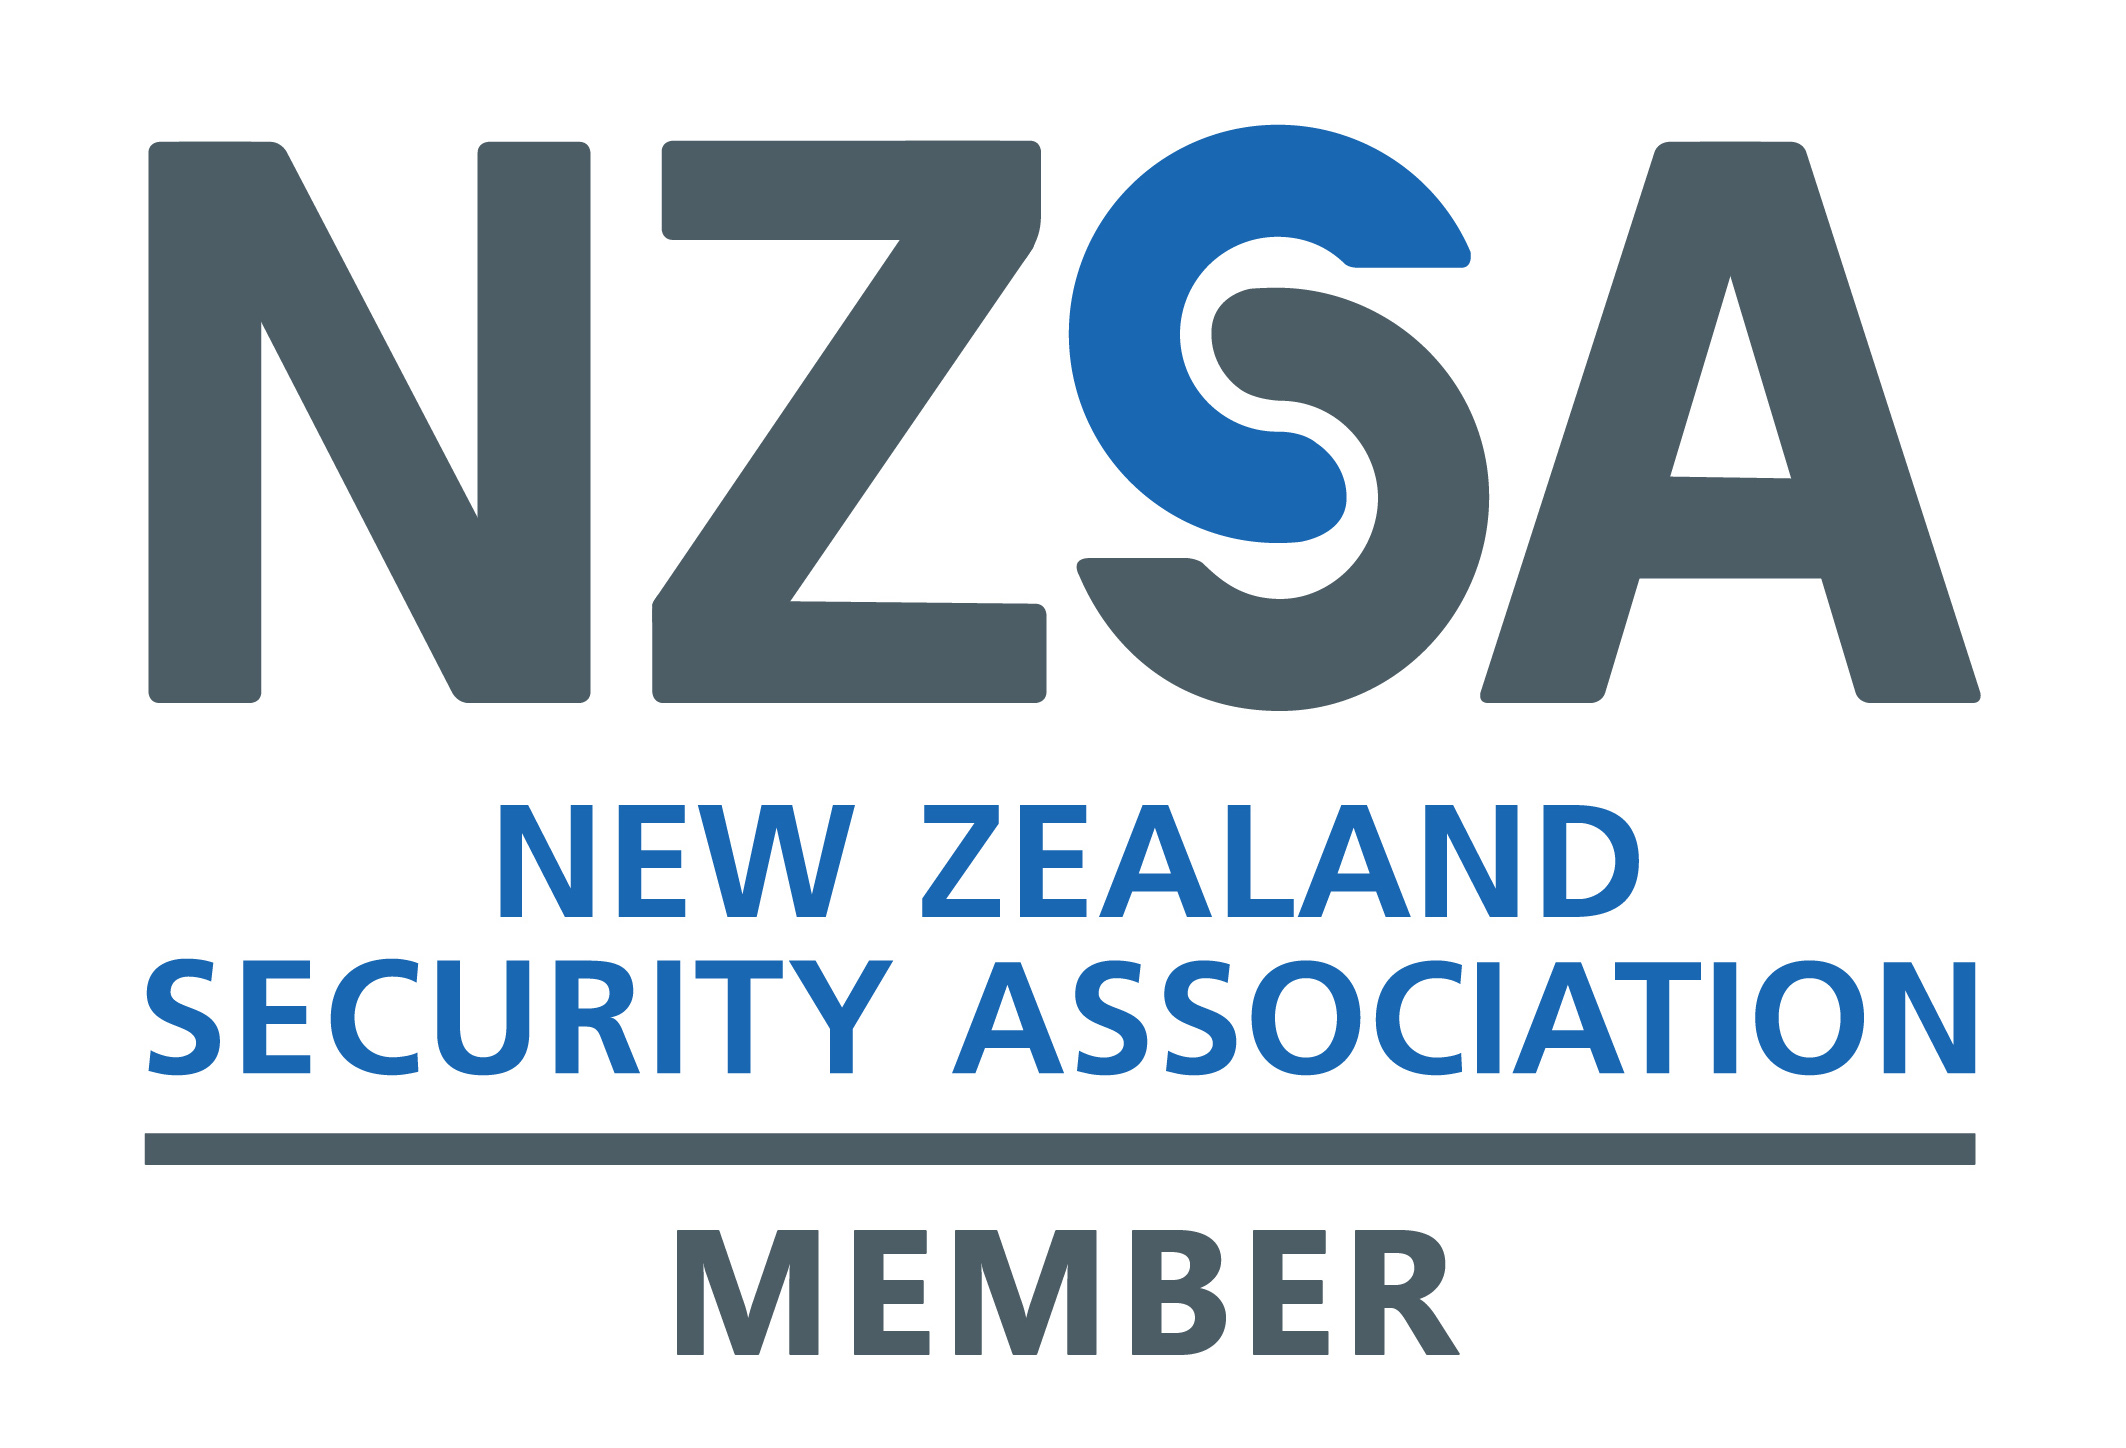 New Zealand Security Association member